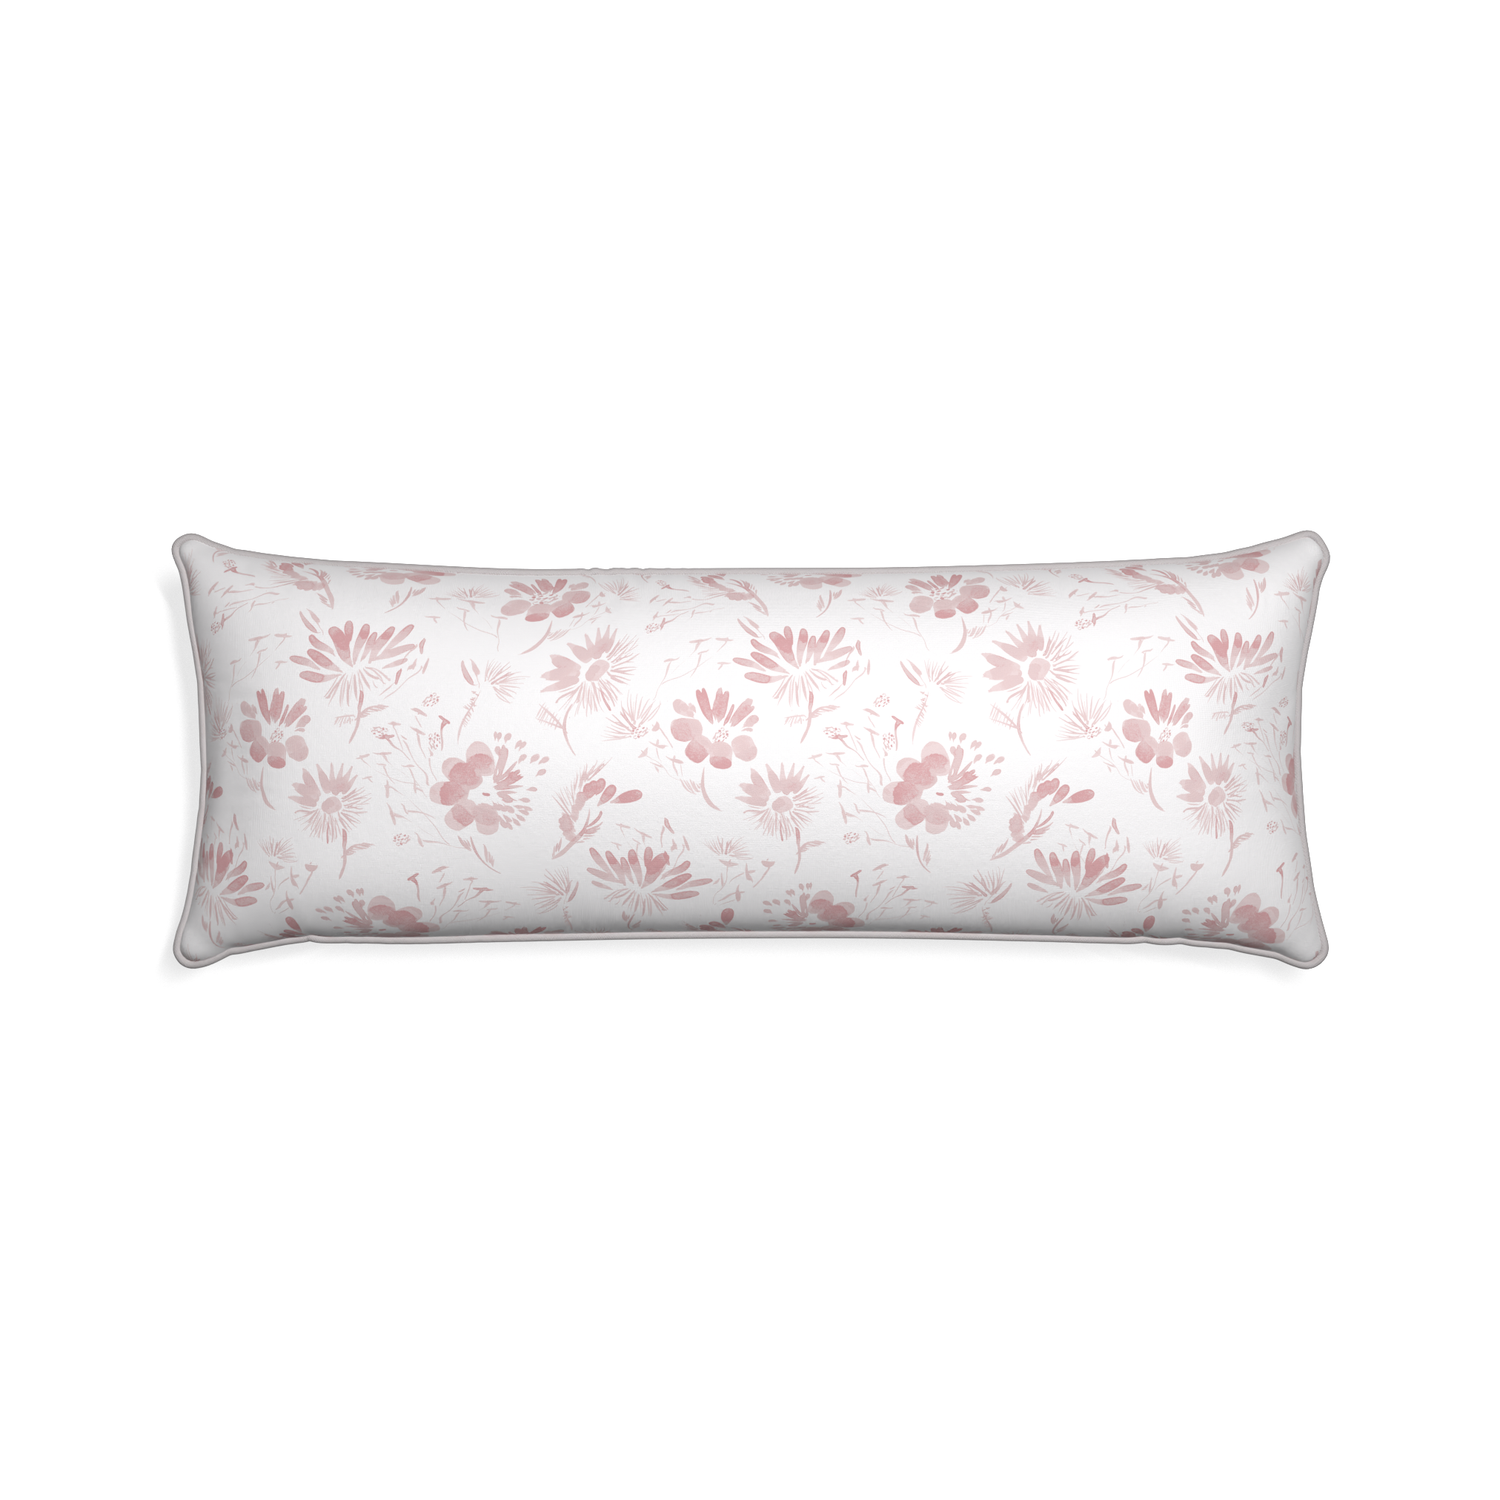 Xl-lumbar blake custom pink floralpillow with pebble piping on white background